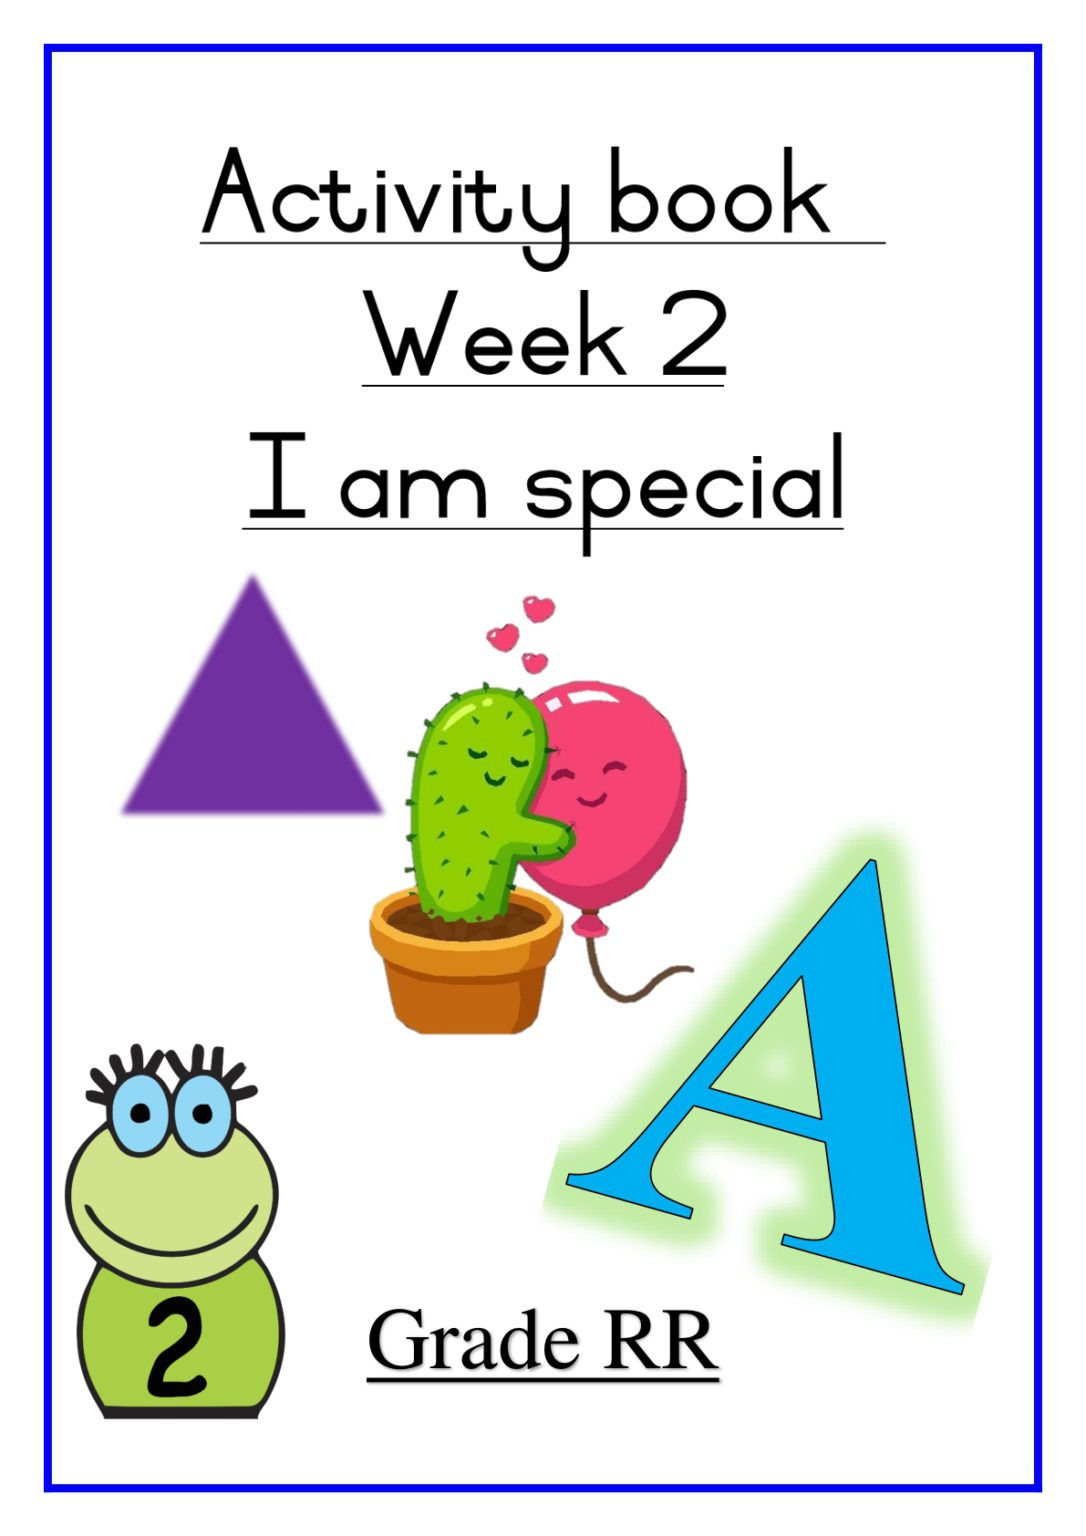 grade-rr-activity-book-week-2-teacha